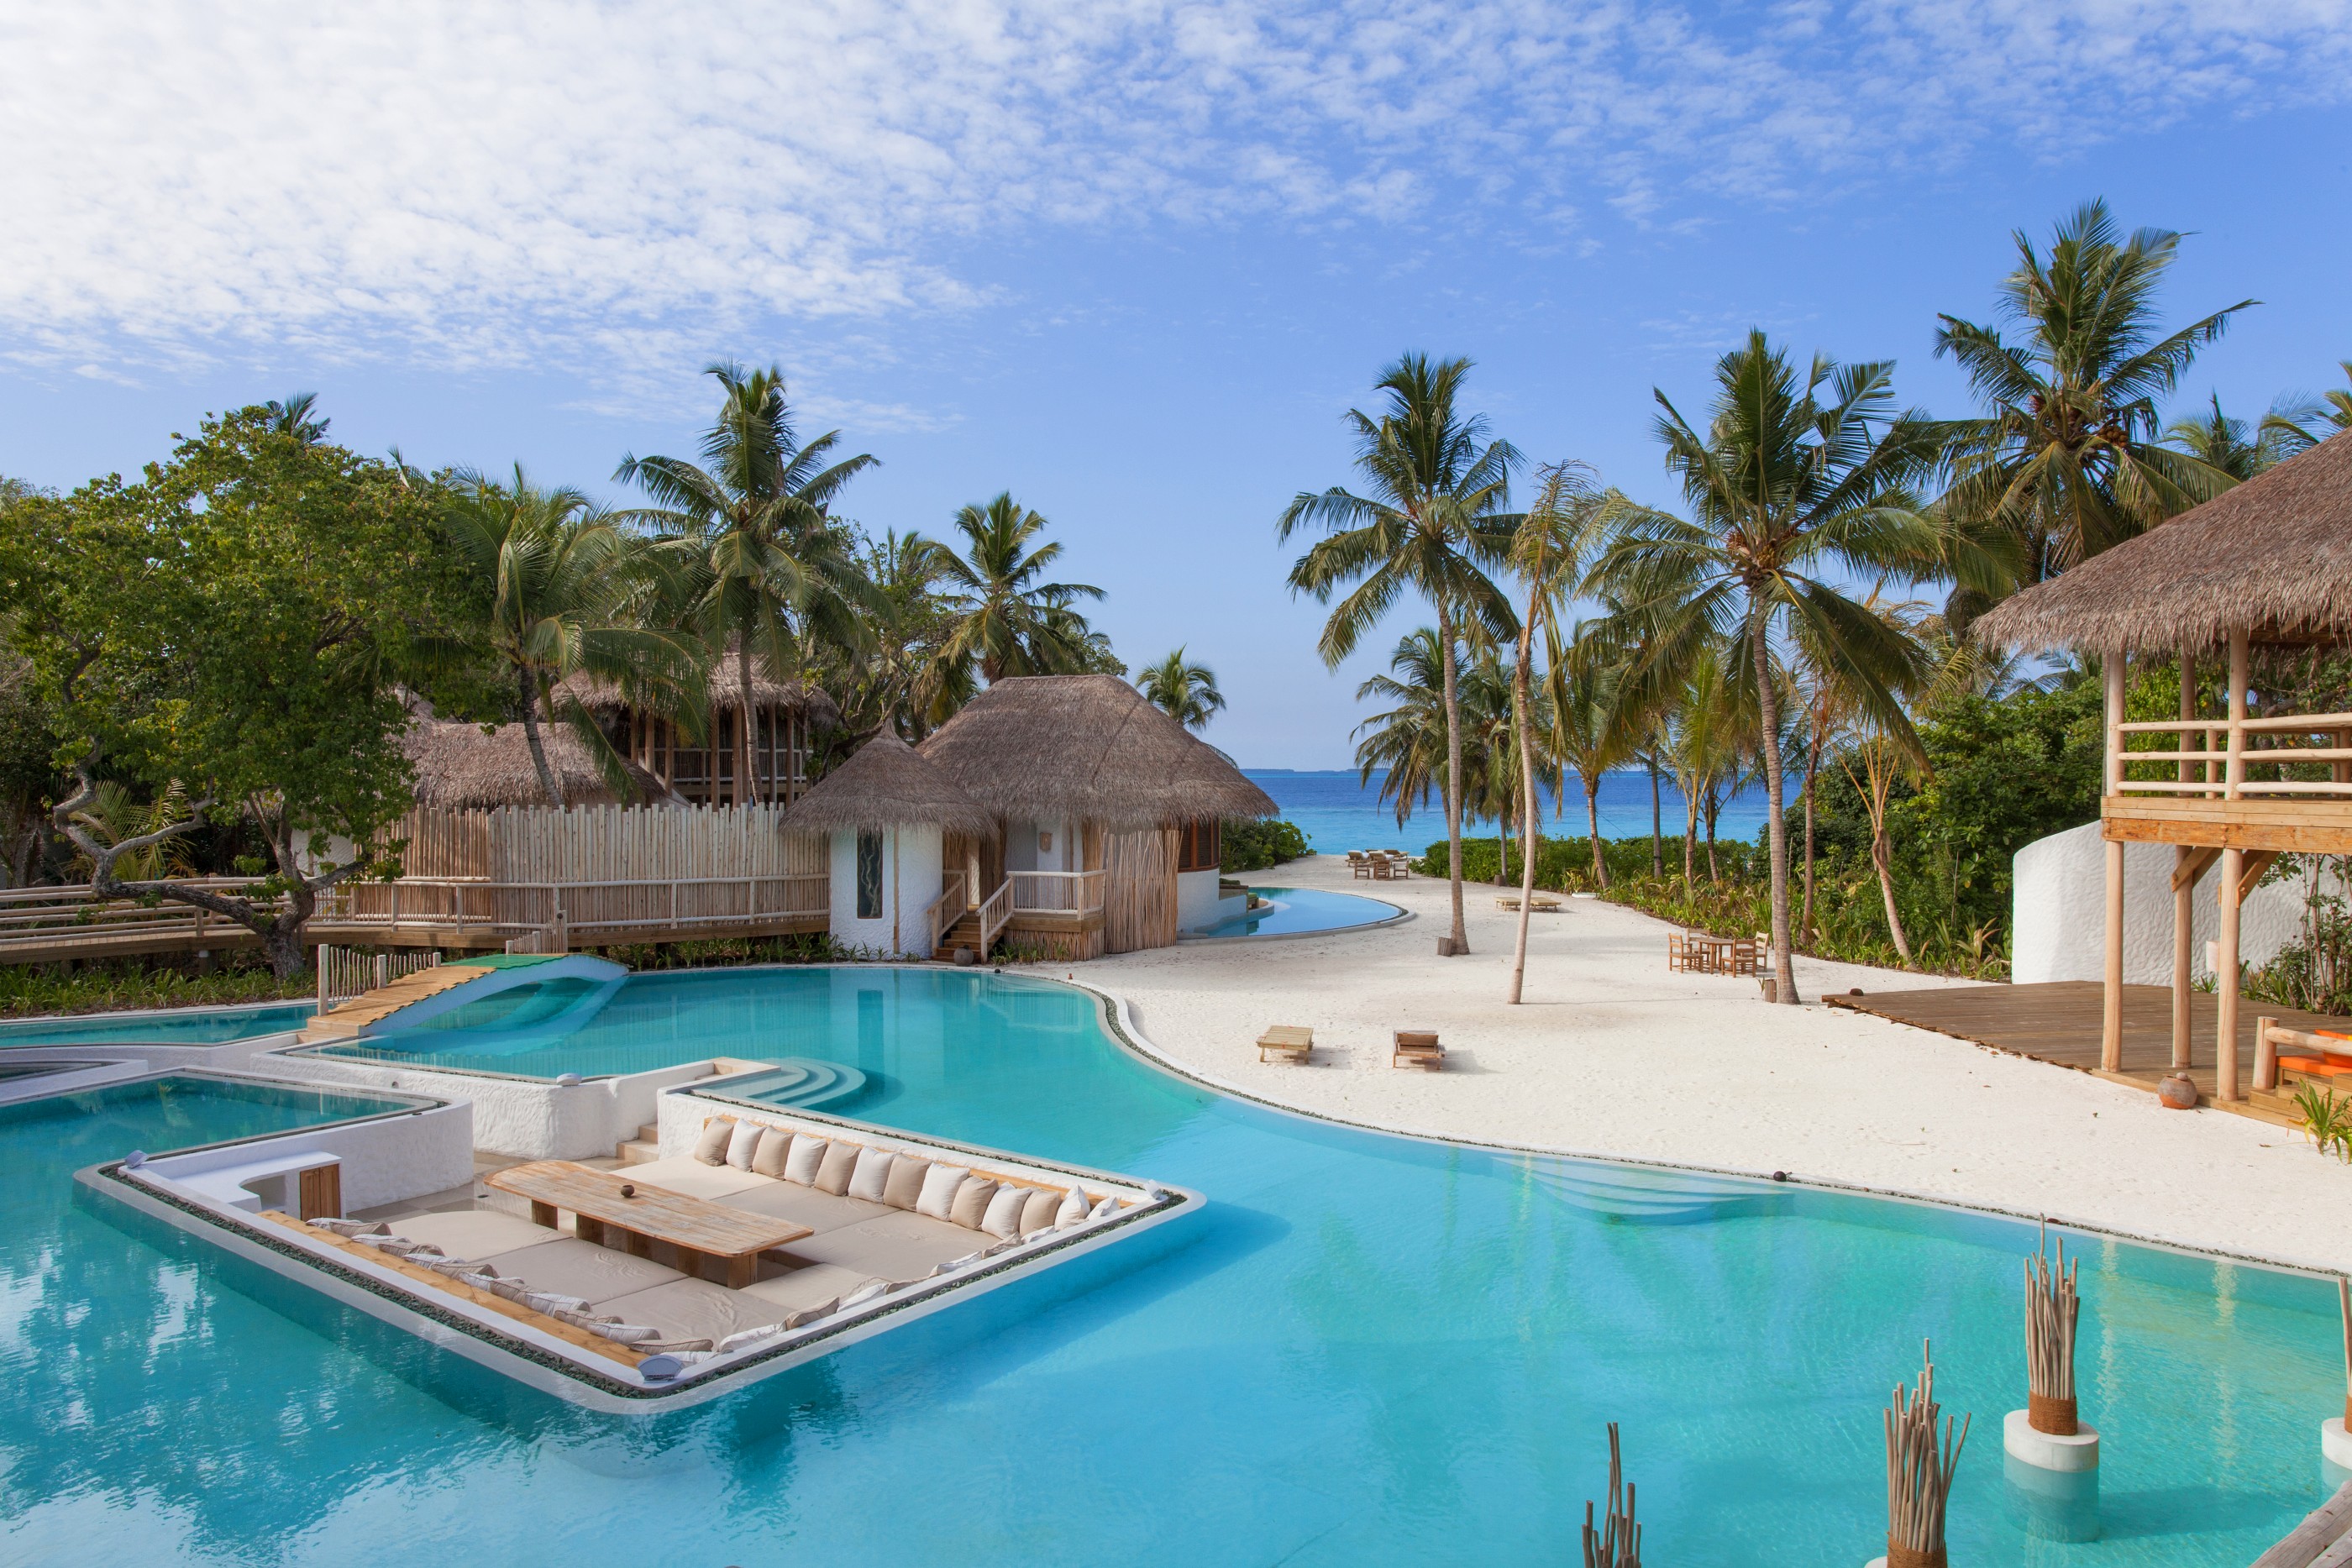 Main pool of Soneva Fushi, Maldives